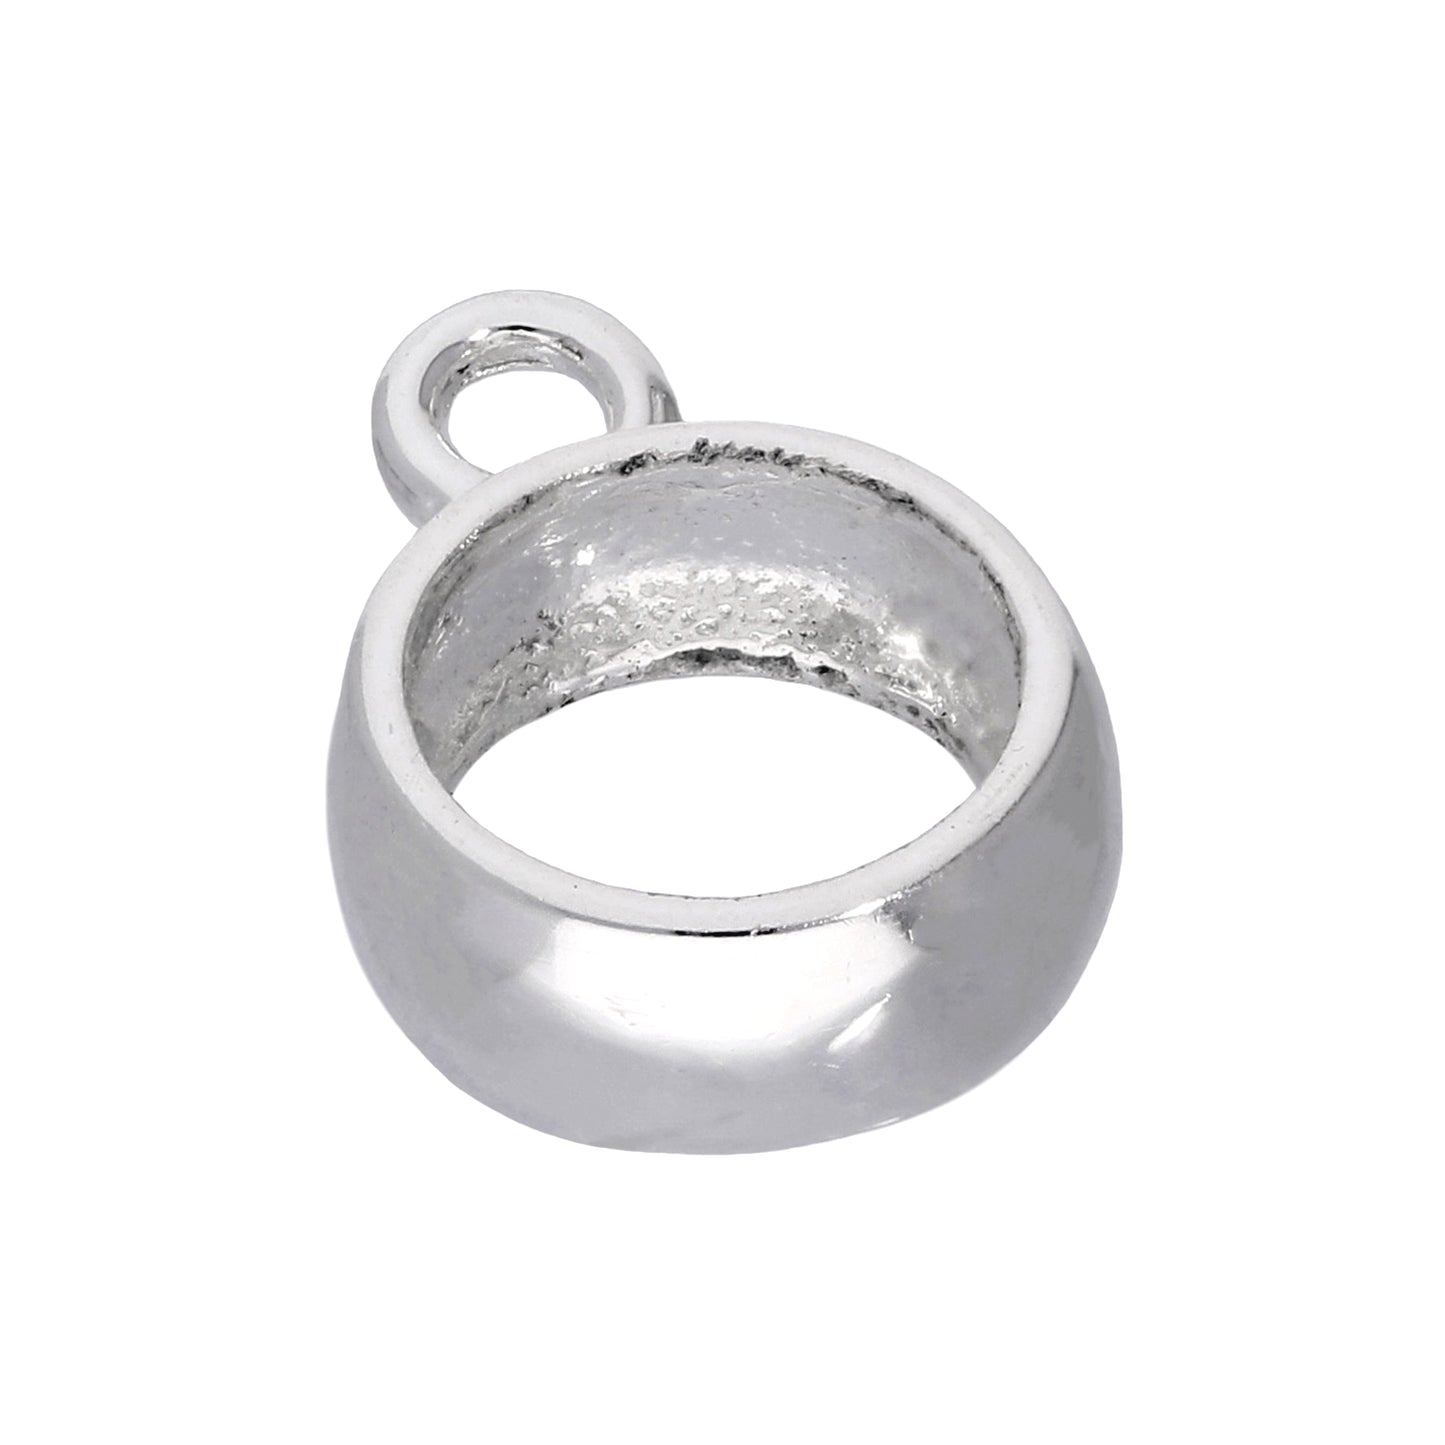 Sterling Silver 5mm Hanger Bead Charm